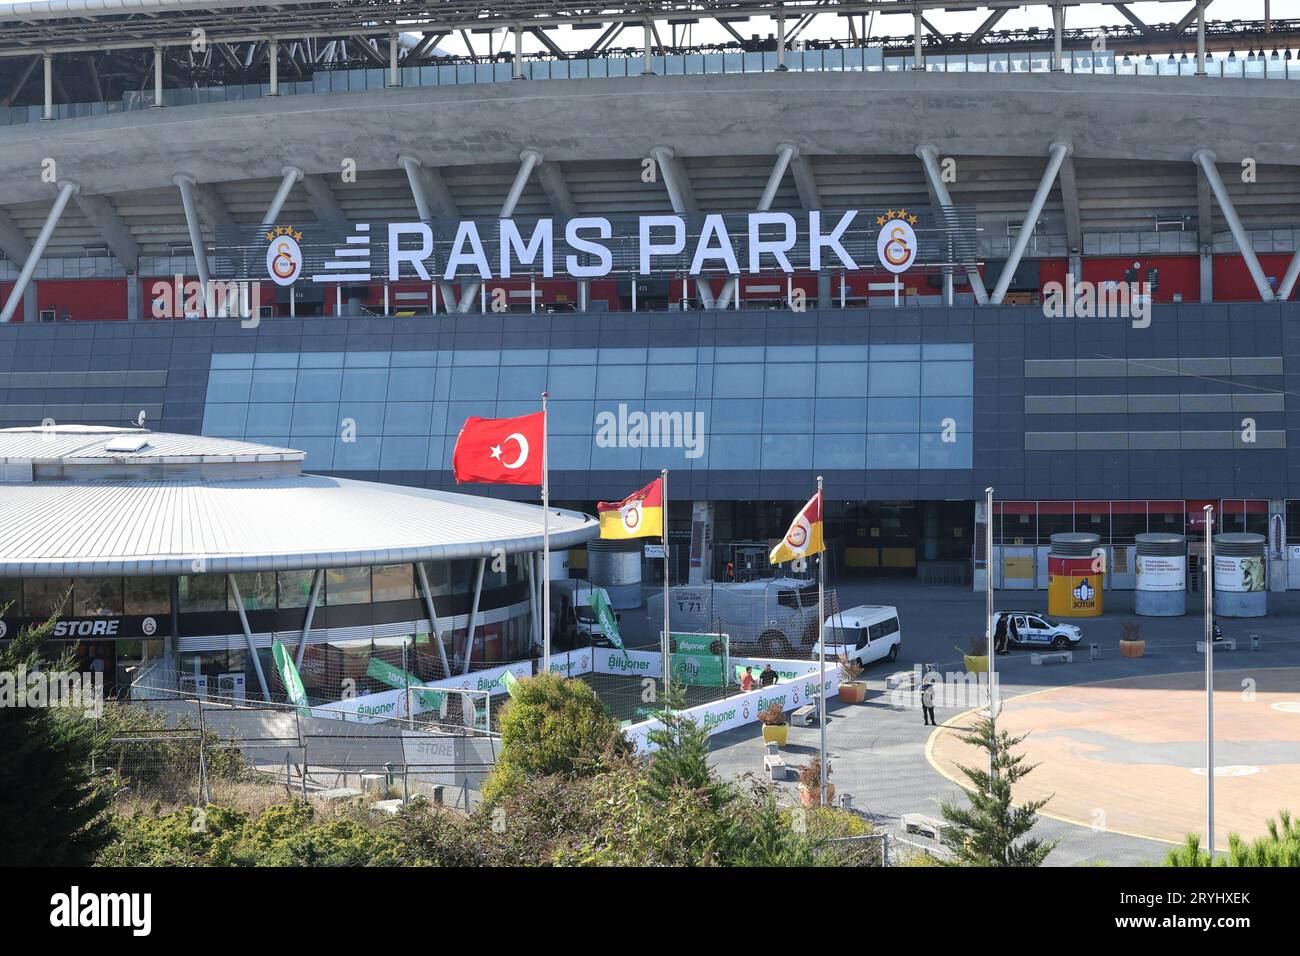 Ali Sami Yen Sports Complex Rams Park football stadium (home of Galatasaray FC) in Istanbul, Turkey Stock Photo